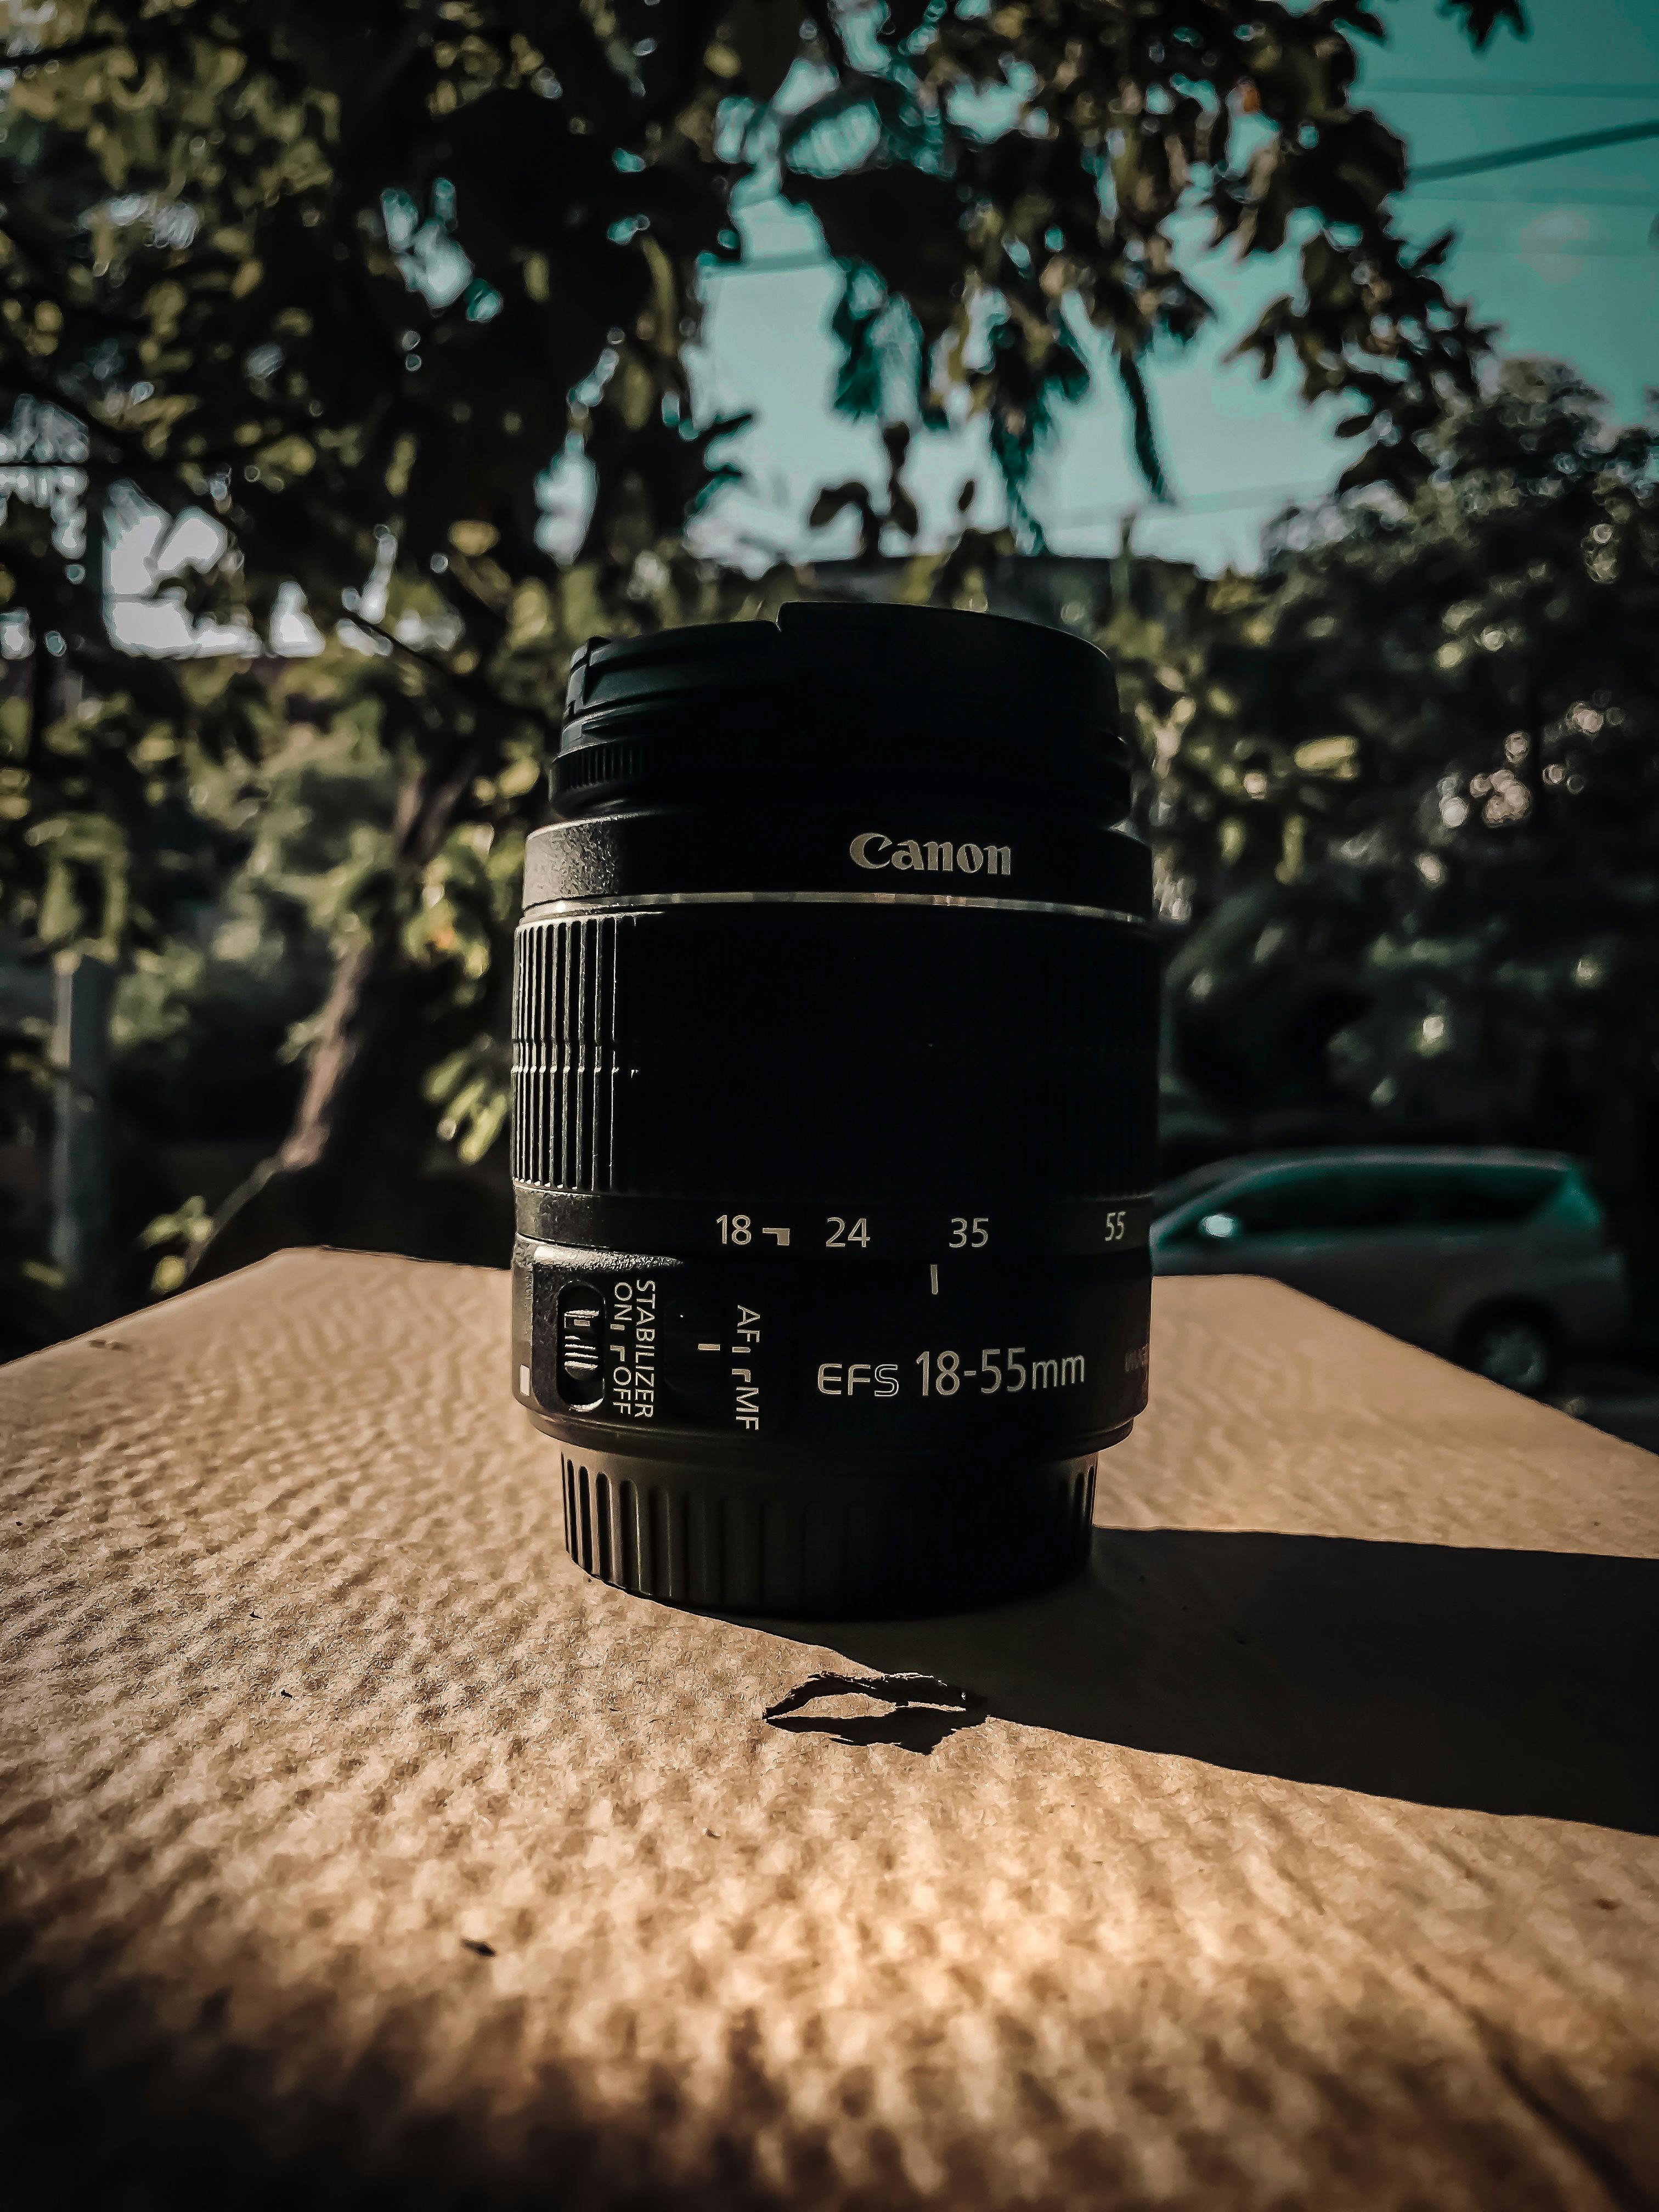 Free stock photo of #Canon, #Lens